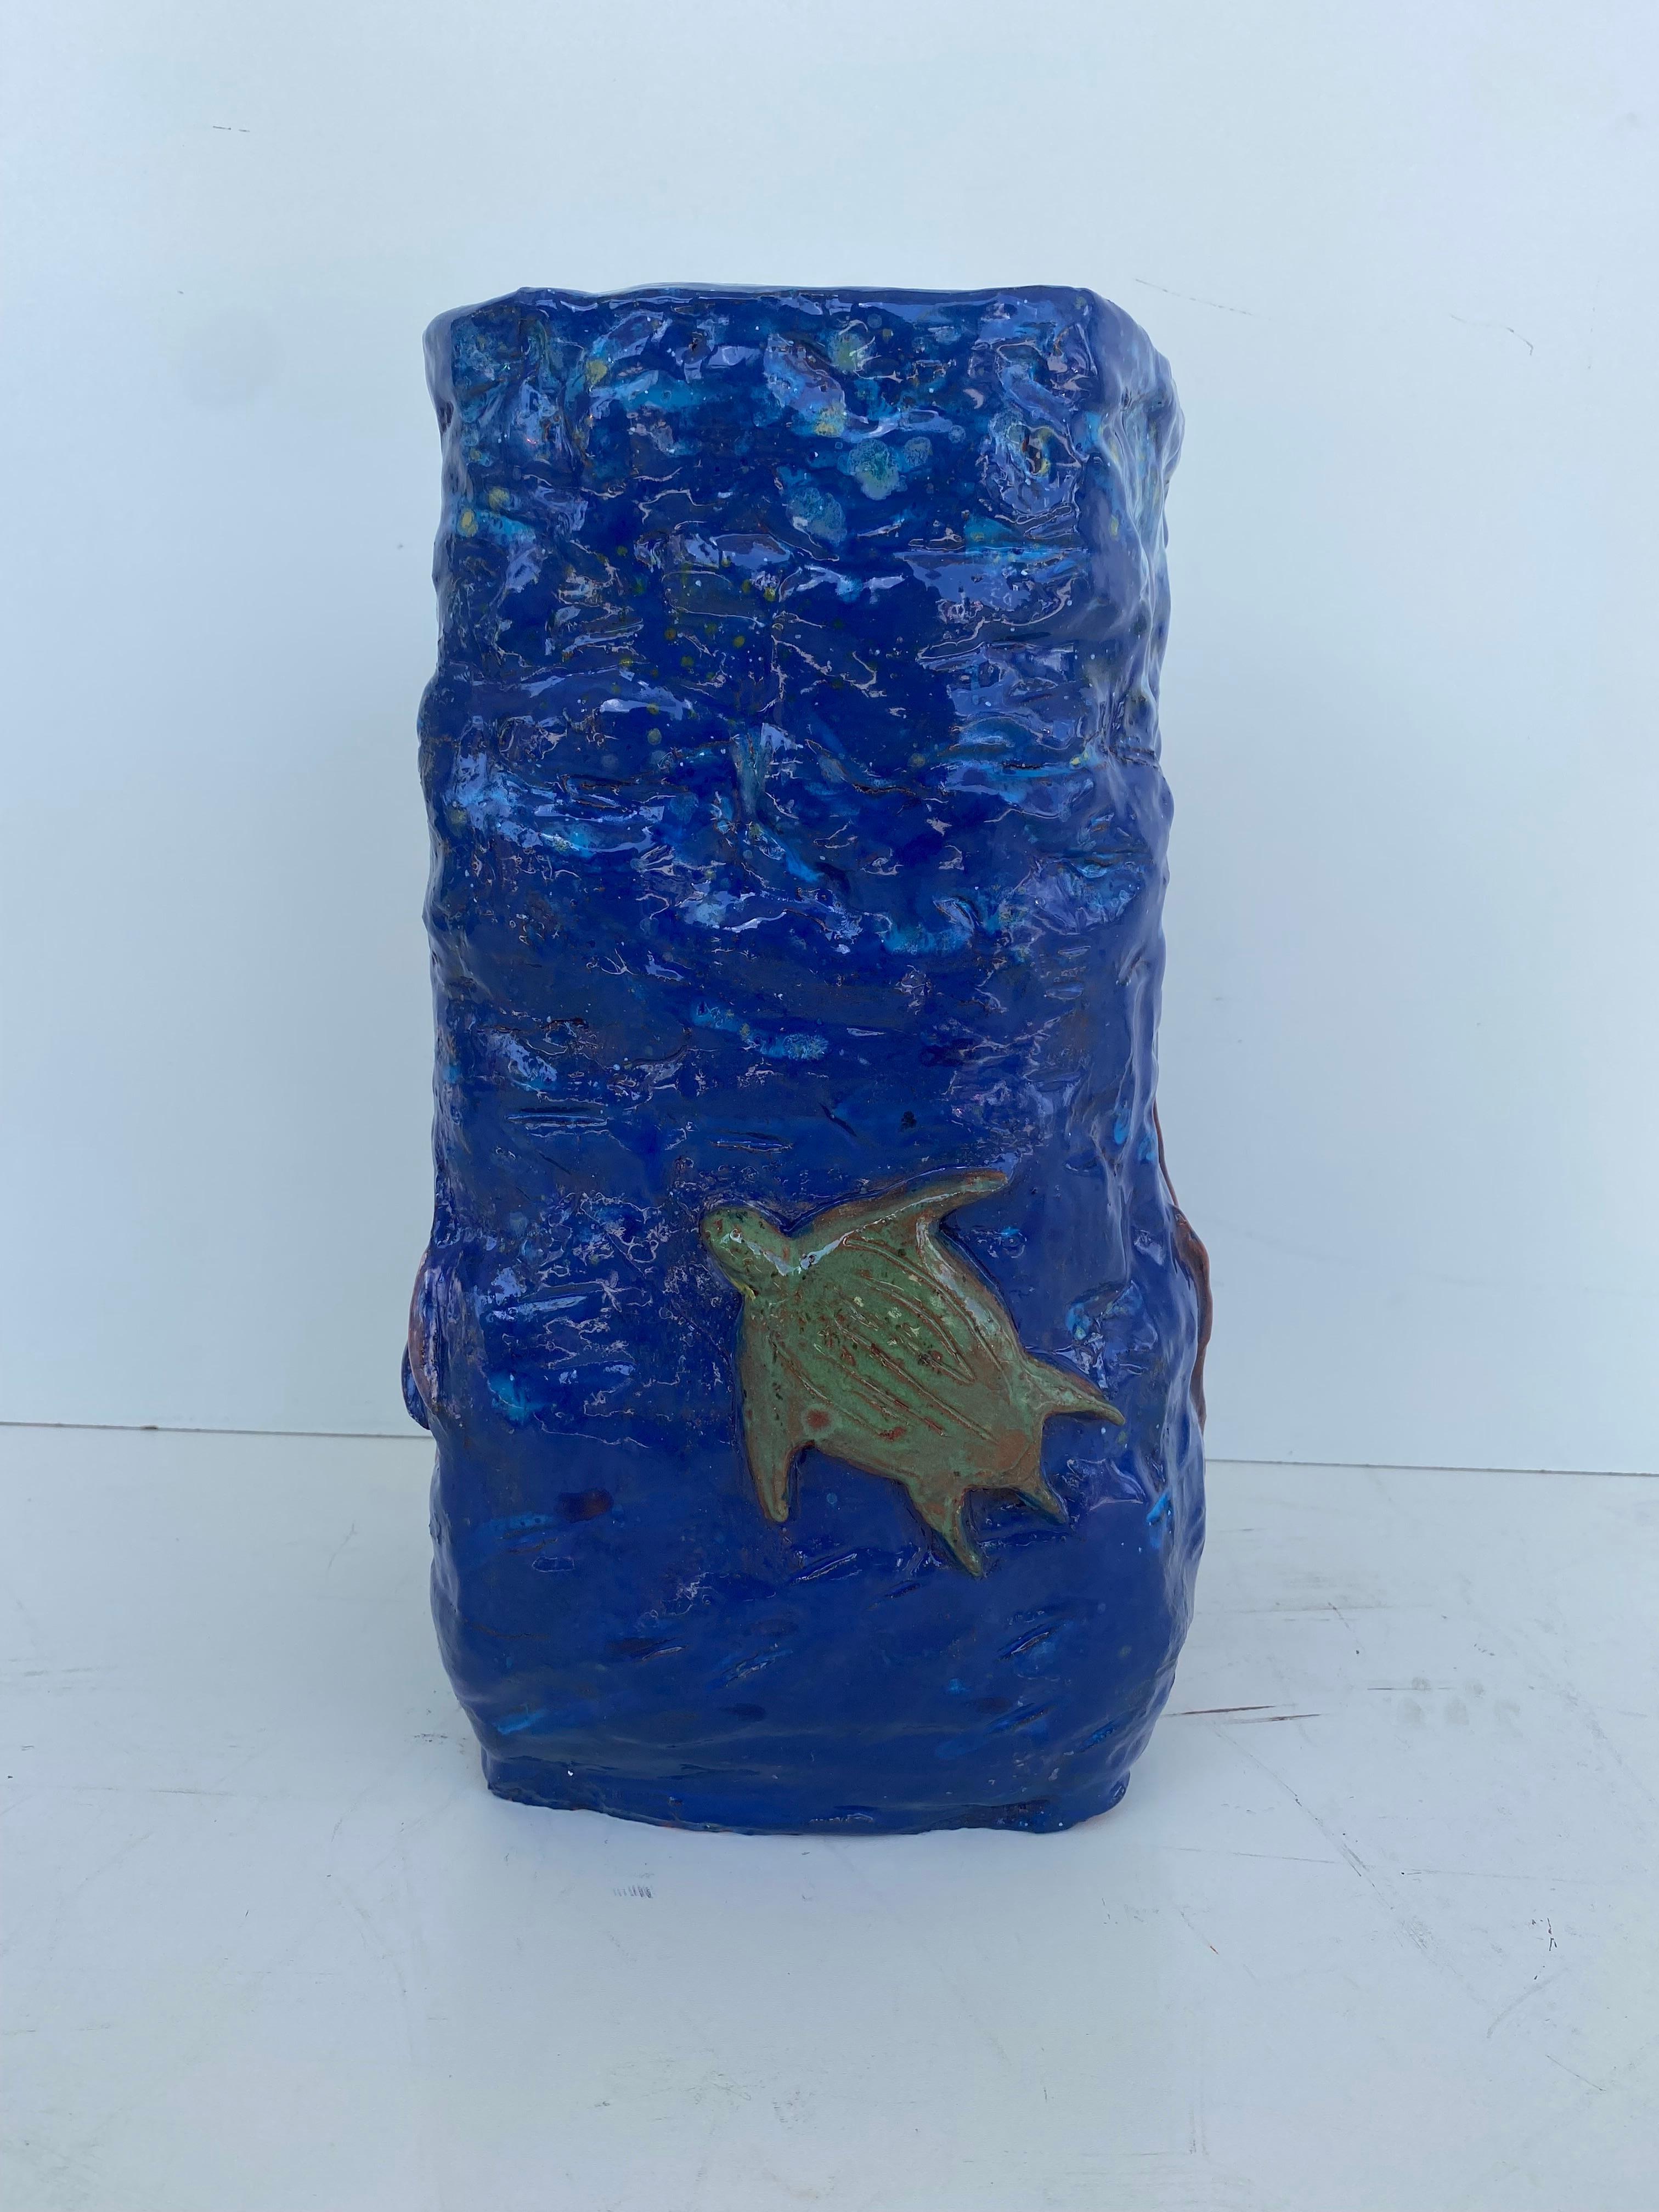 Hand-Crafted Unique Hand-Made Sculptural Glazed Ceramic Umbrella Stand by Rexx Fischer 2024 For Sale